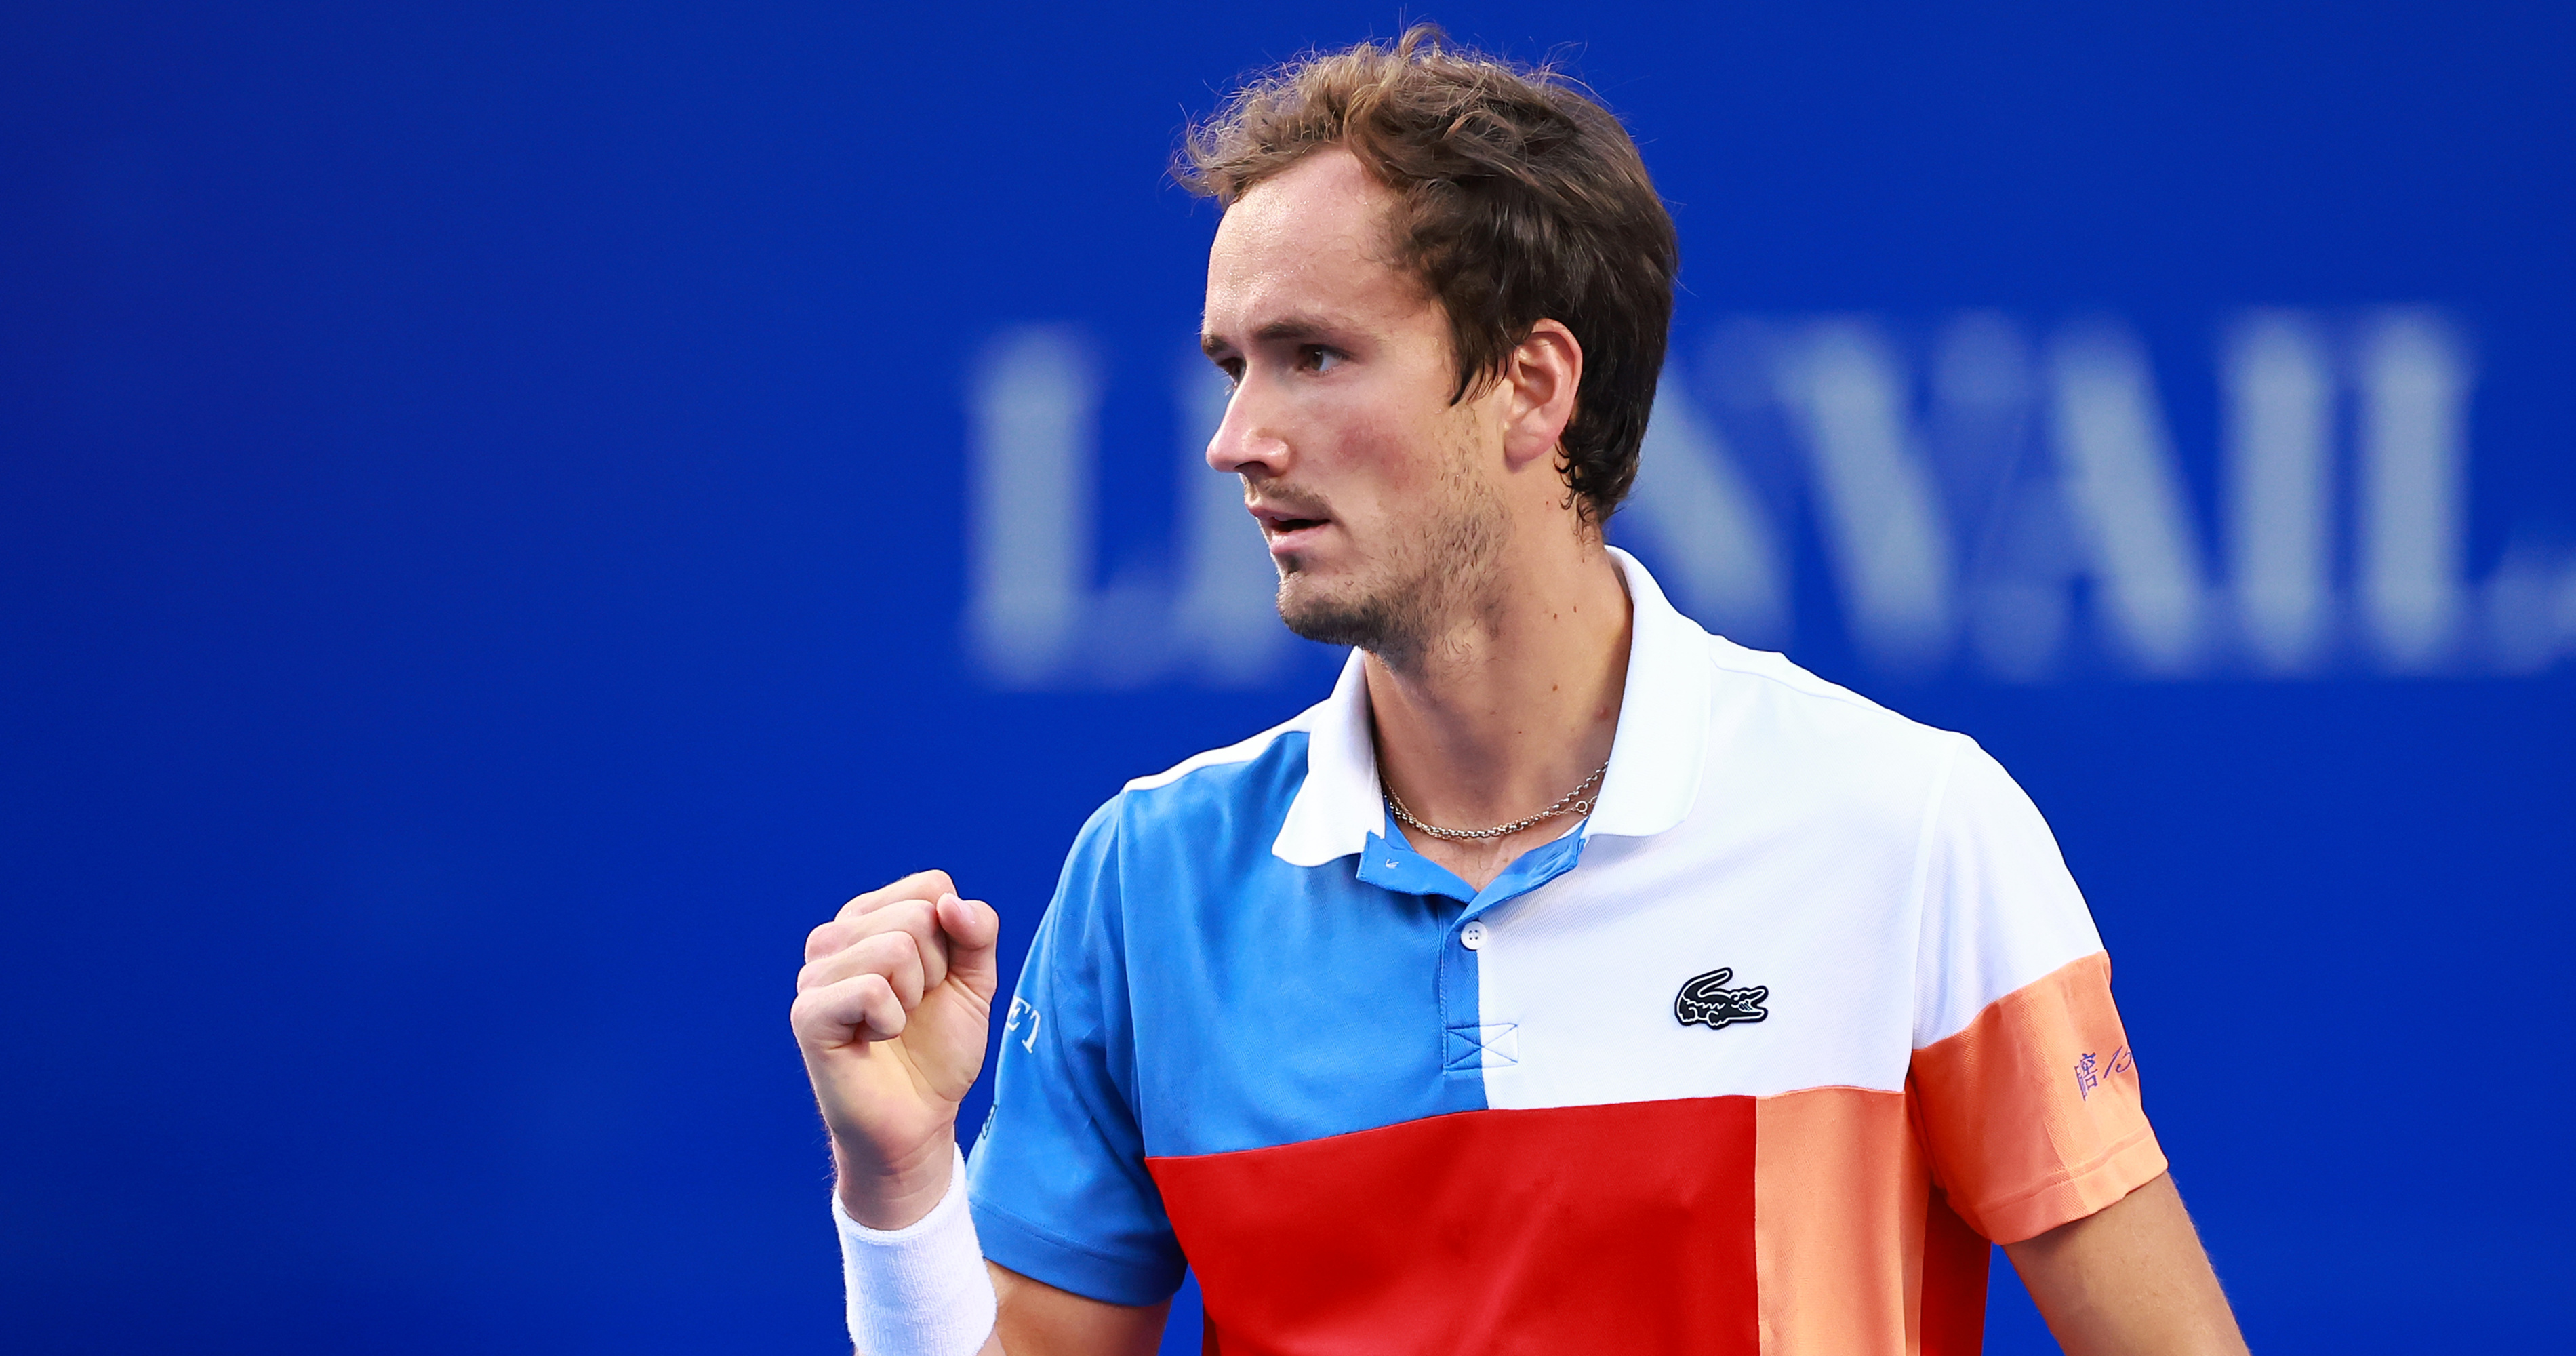 Daniil Medvedev Becomes 1st Non-Federer, Djokovic, Murray, Nadal No